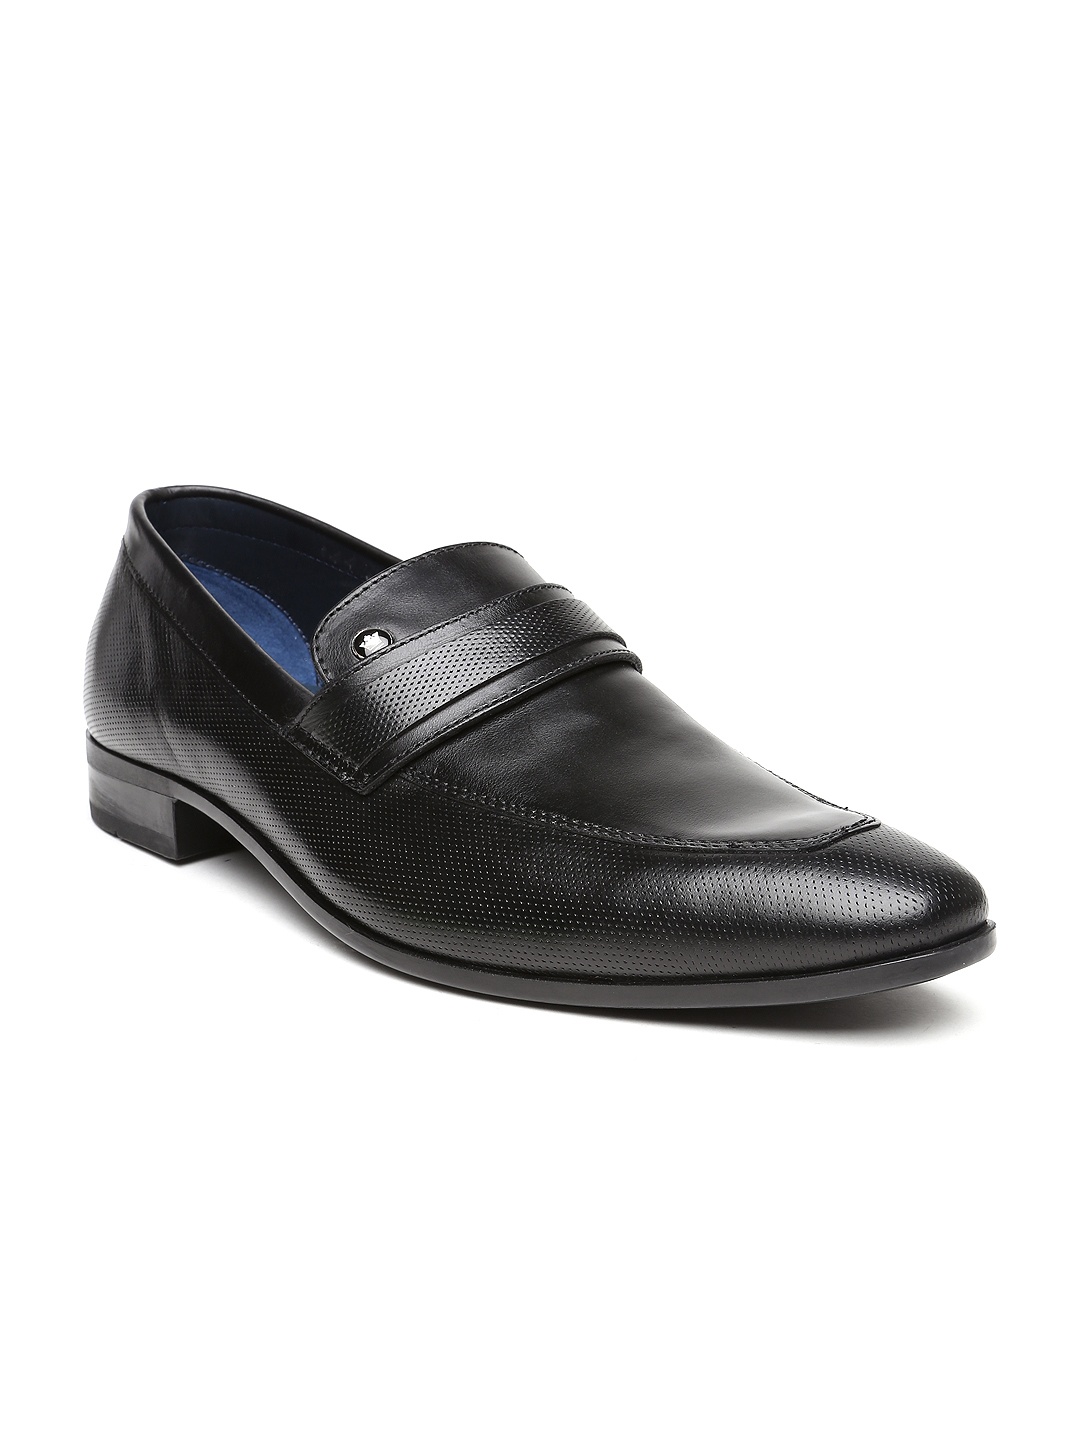 Myntra Louis Philippe Men Black Leather Formal Shoes 801485 | Buy Myntra Louis Philippe Formal ...